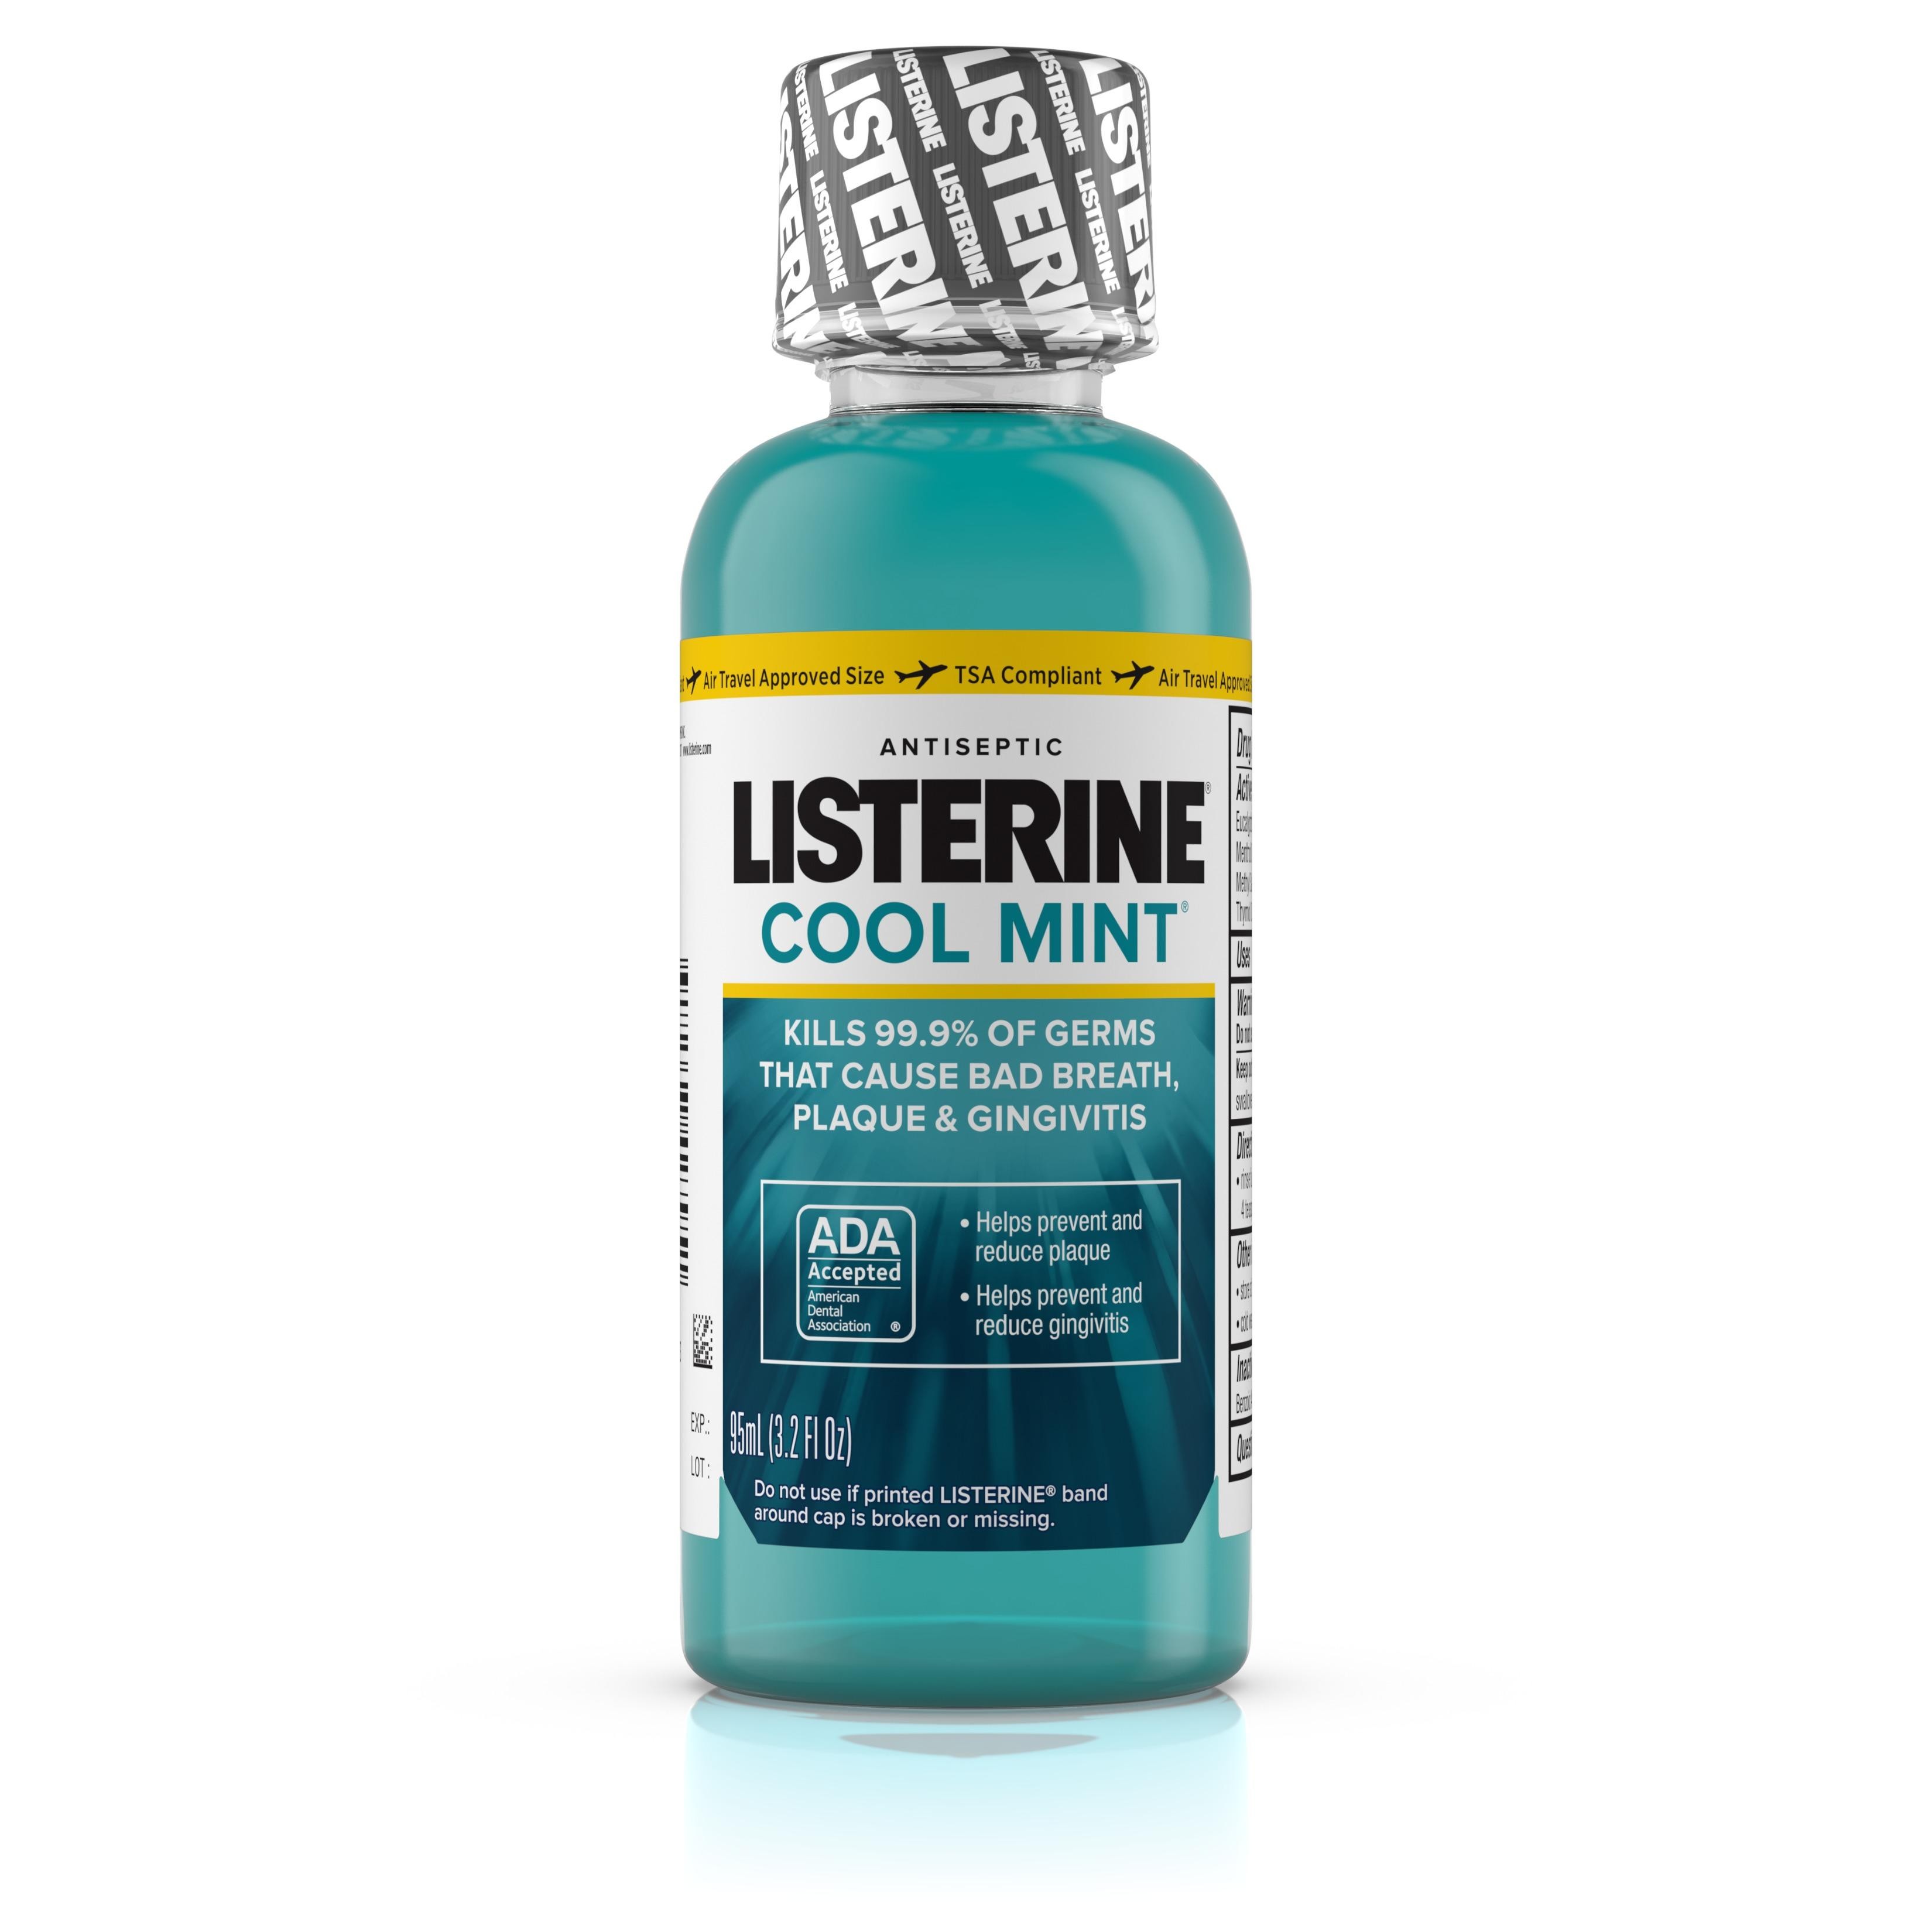 Listerine Antiseptic Mouthwash for Bad Breath, Plaque, and Gingivitis, Travel Size 3.2 Oz